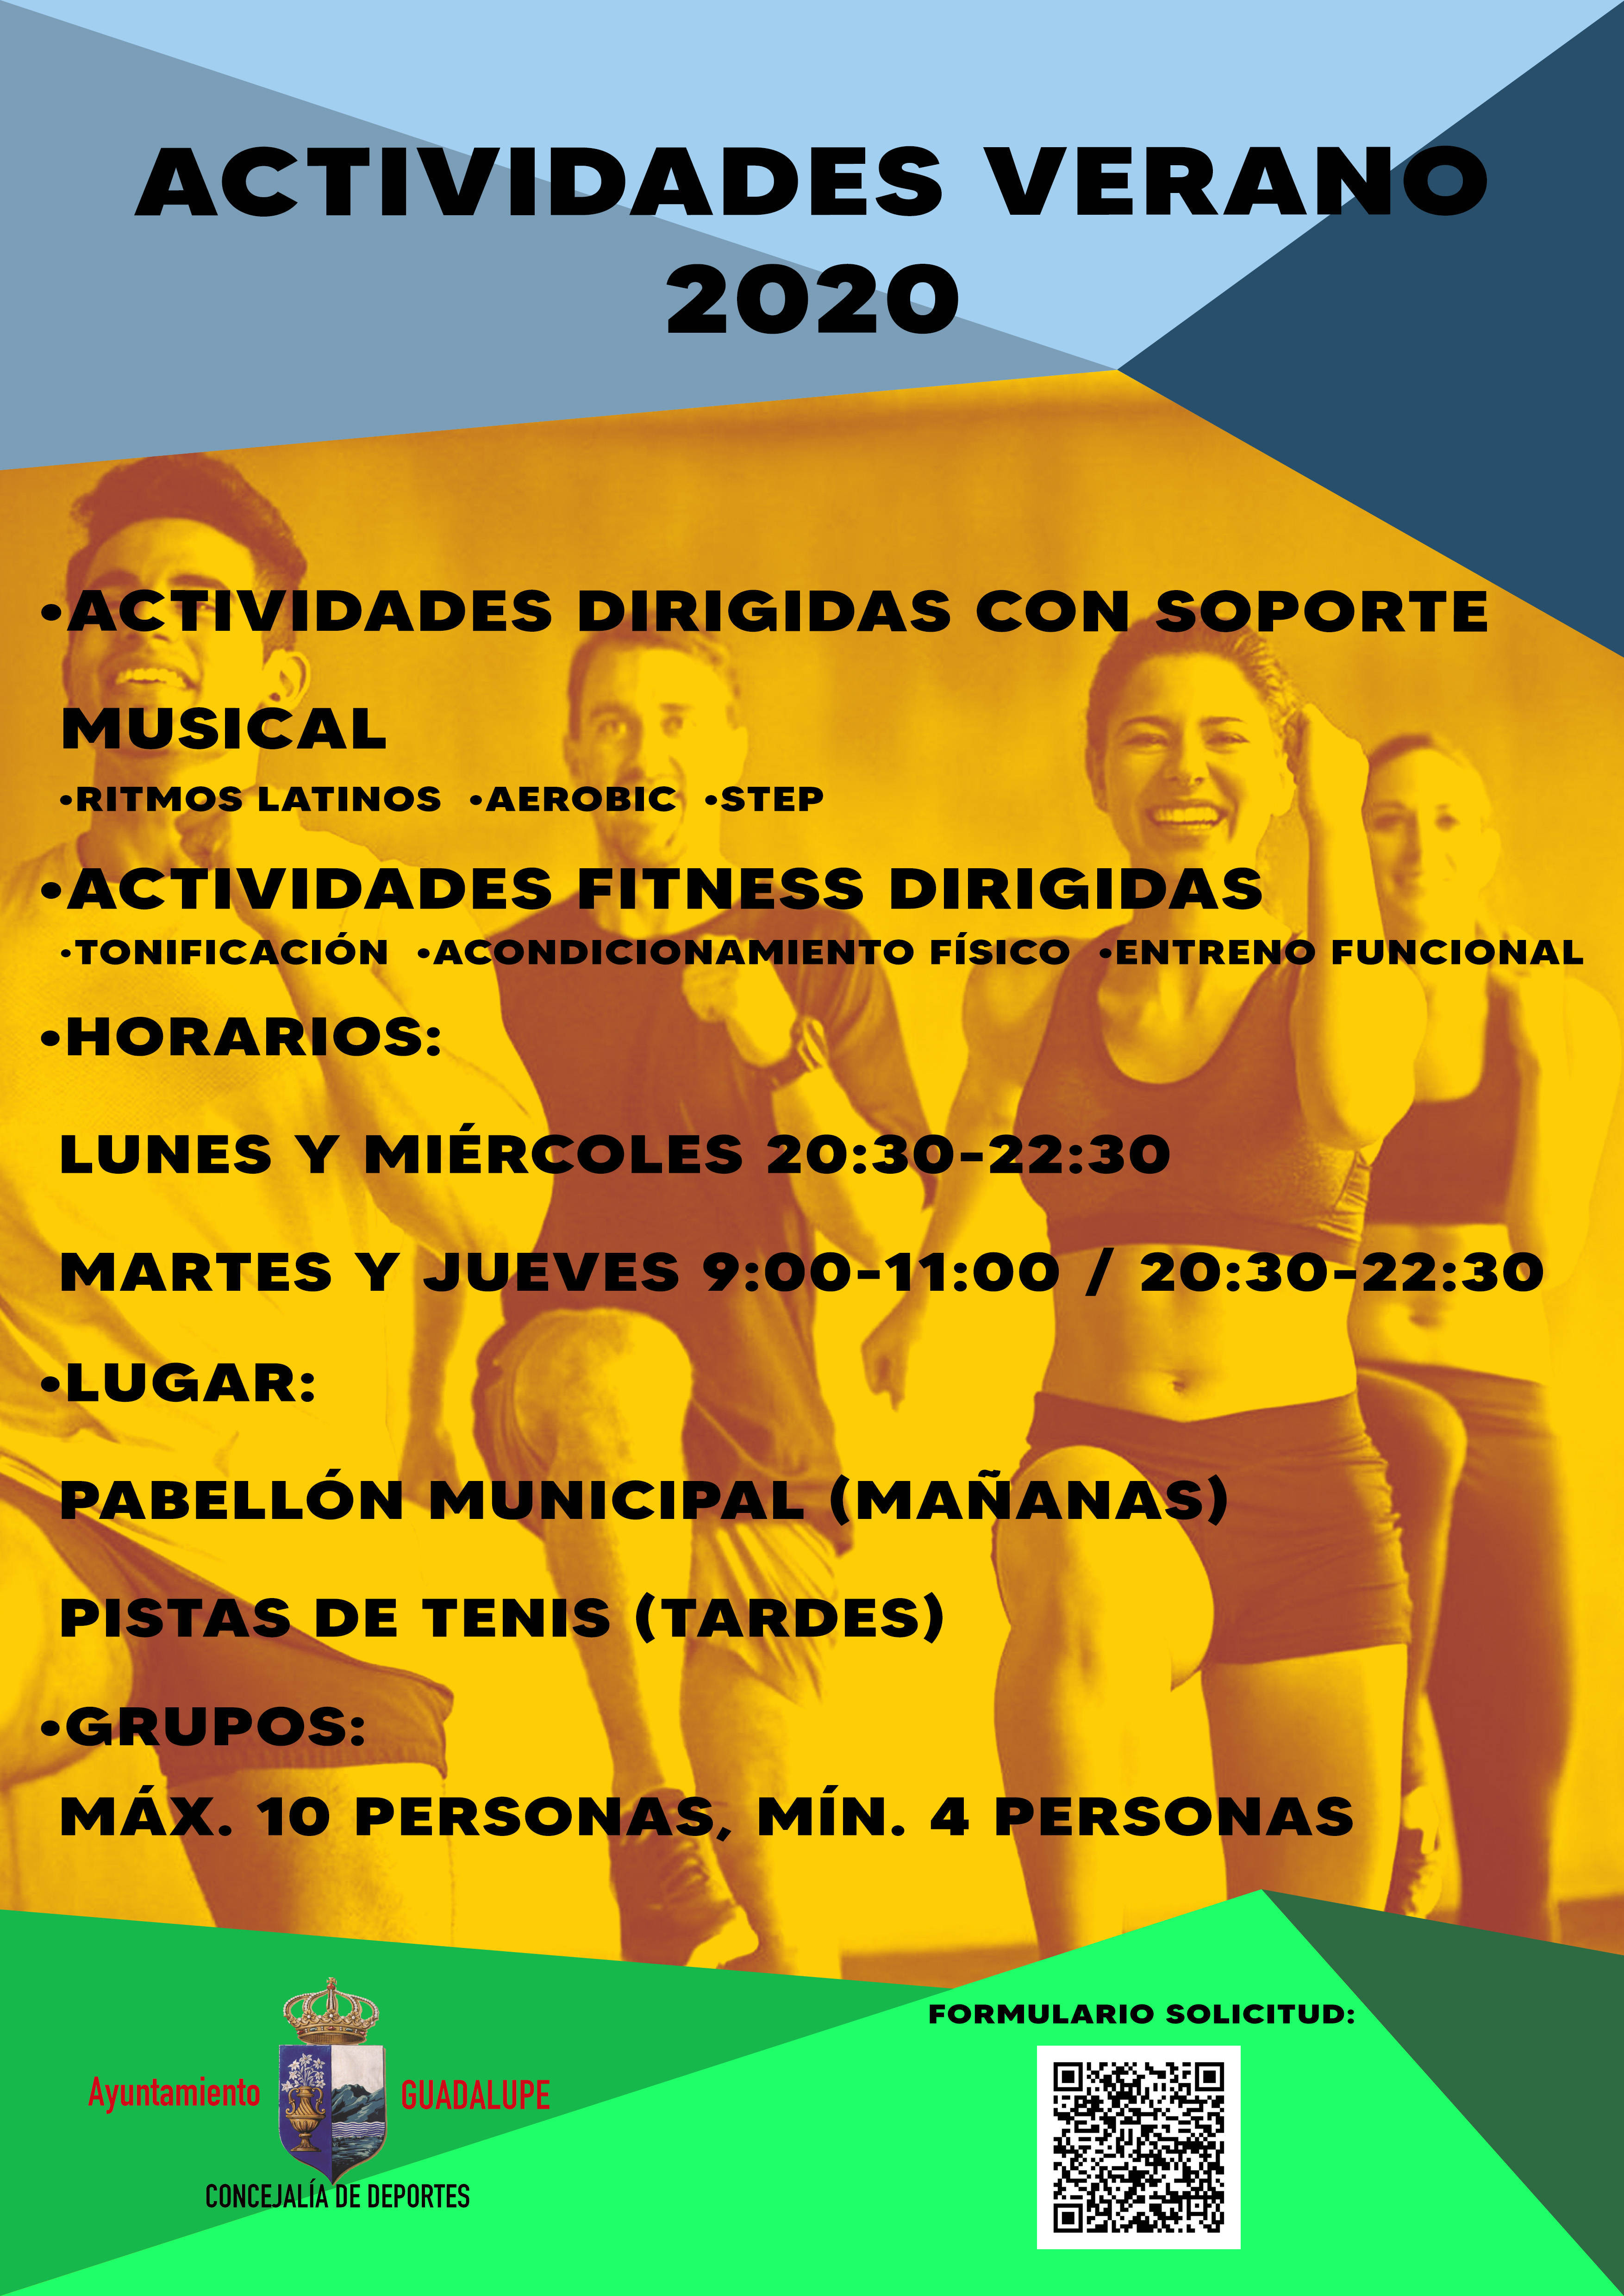 Actividades de verano 2020 - Guadalupe (Cáceres)